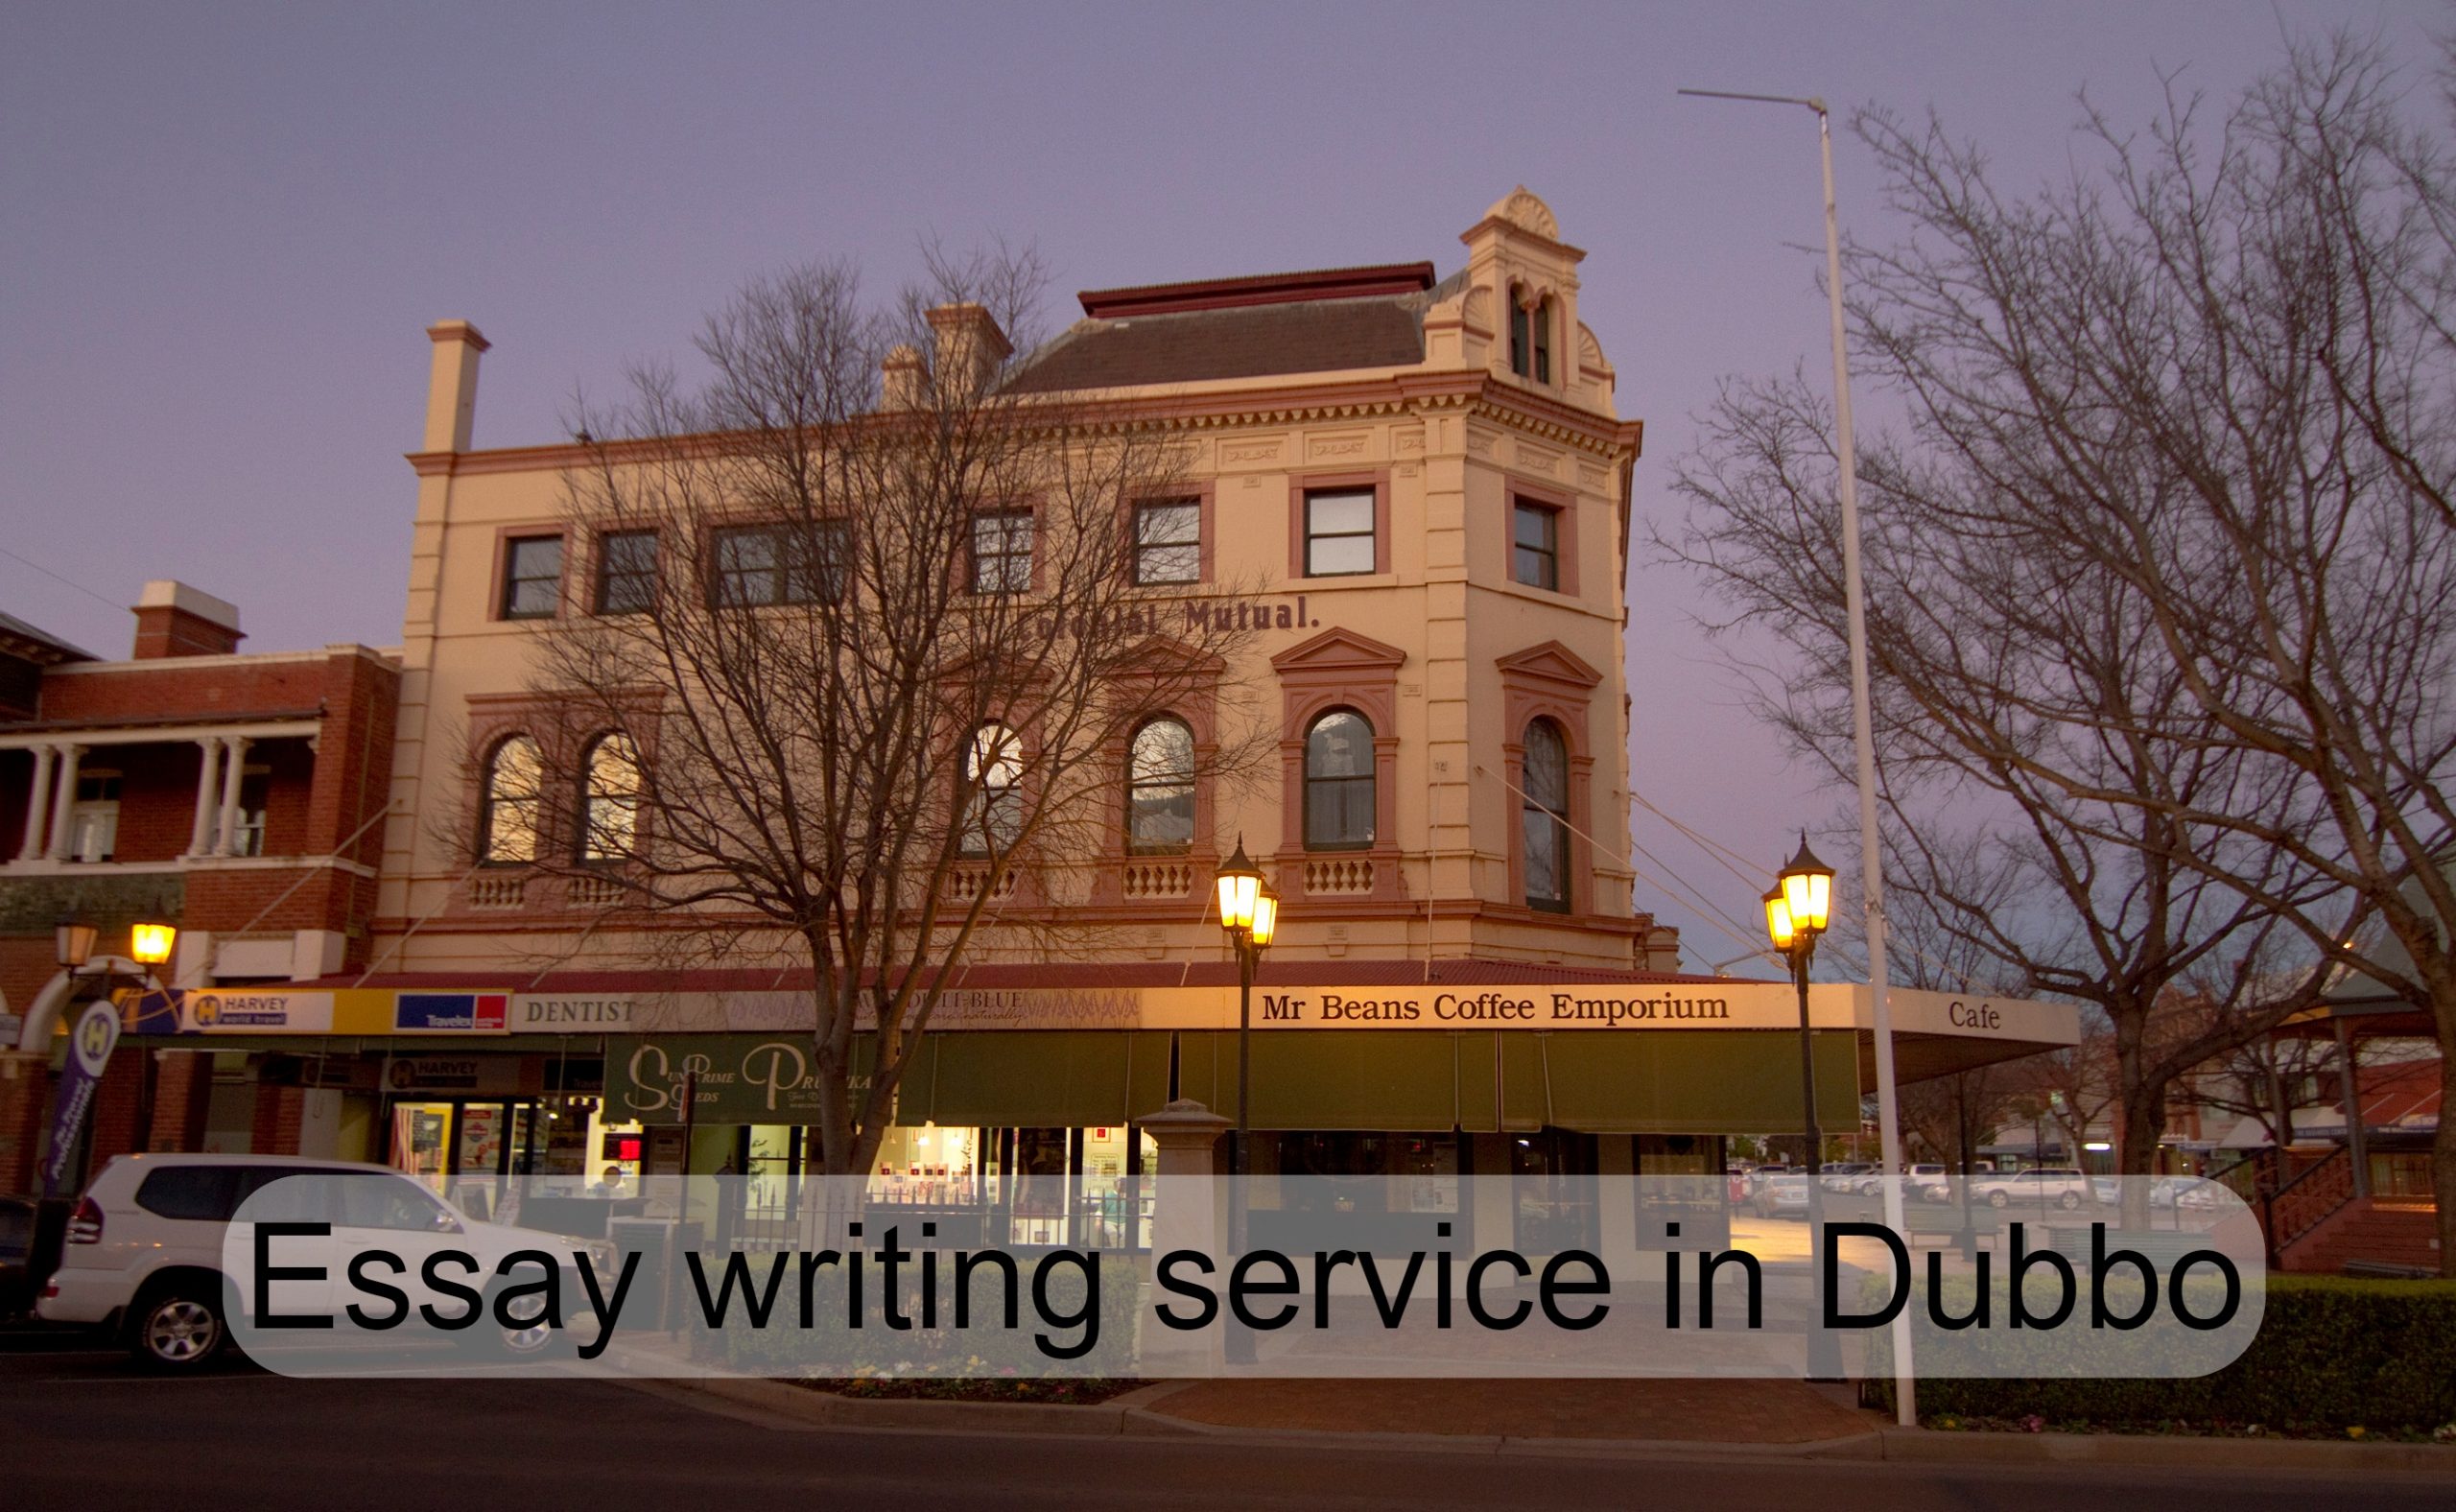 Essay writing service in Dubbo